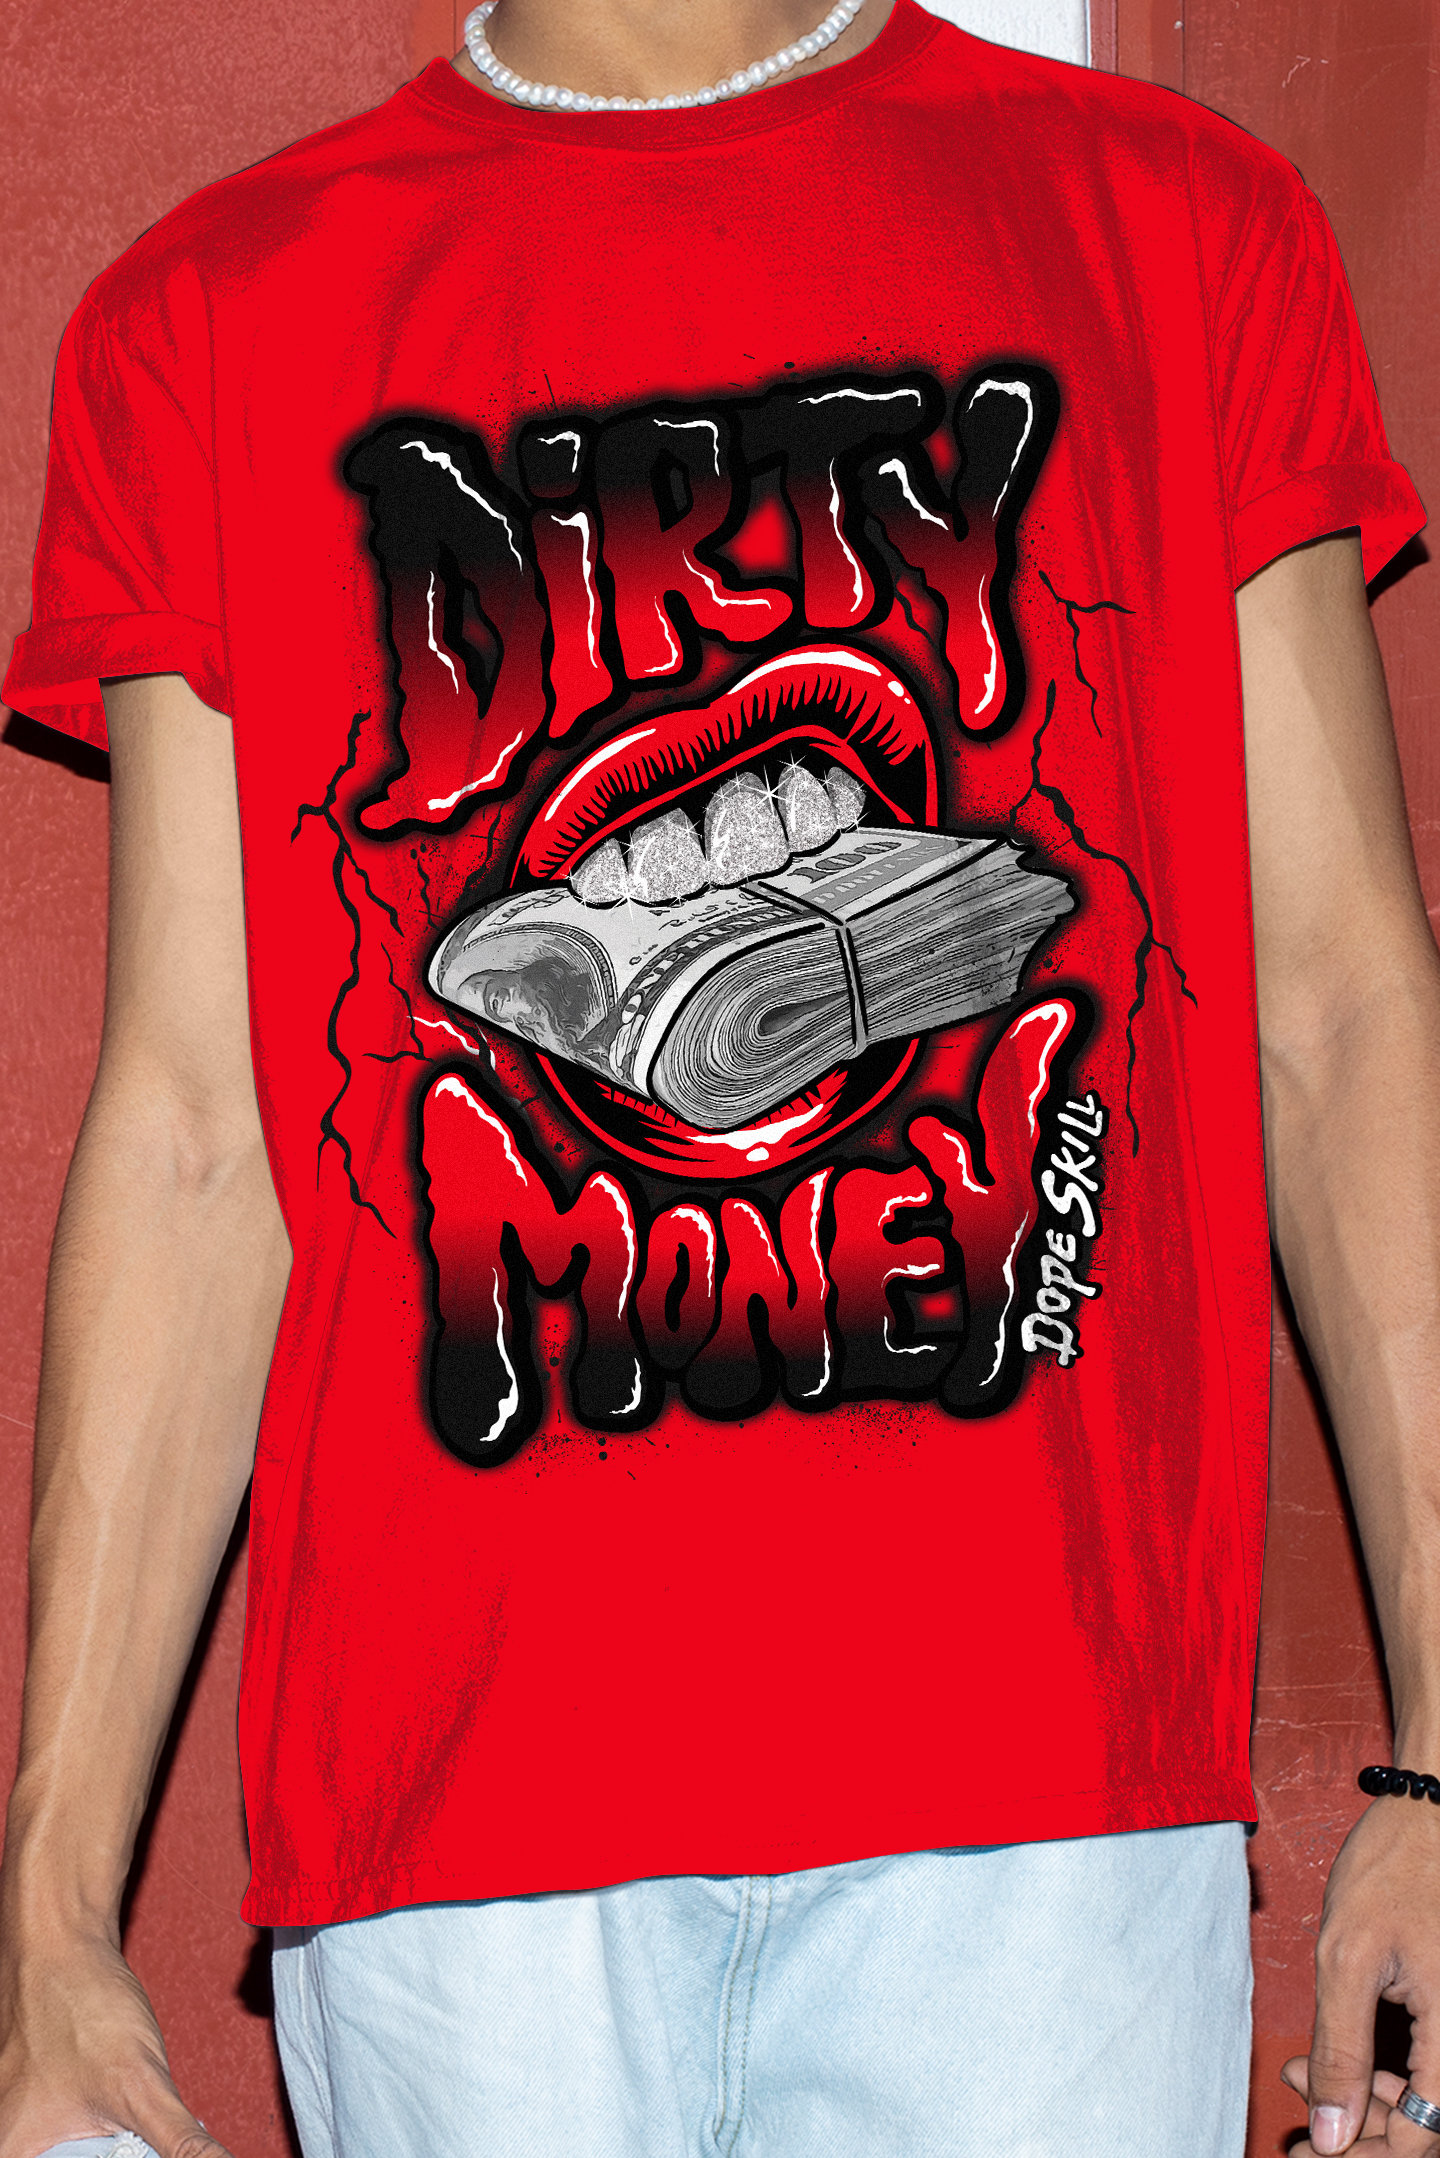 dirty money graphic to match jordan 4 red thunder red t shirt v4sdm